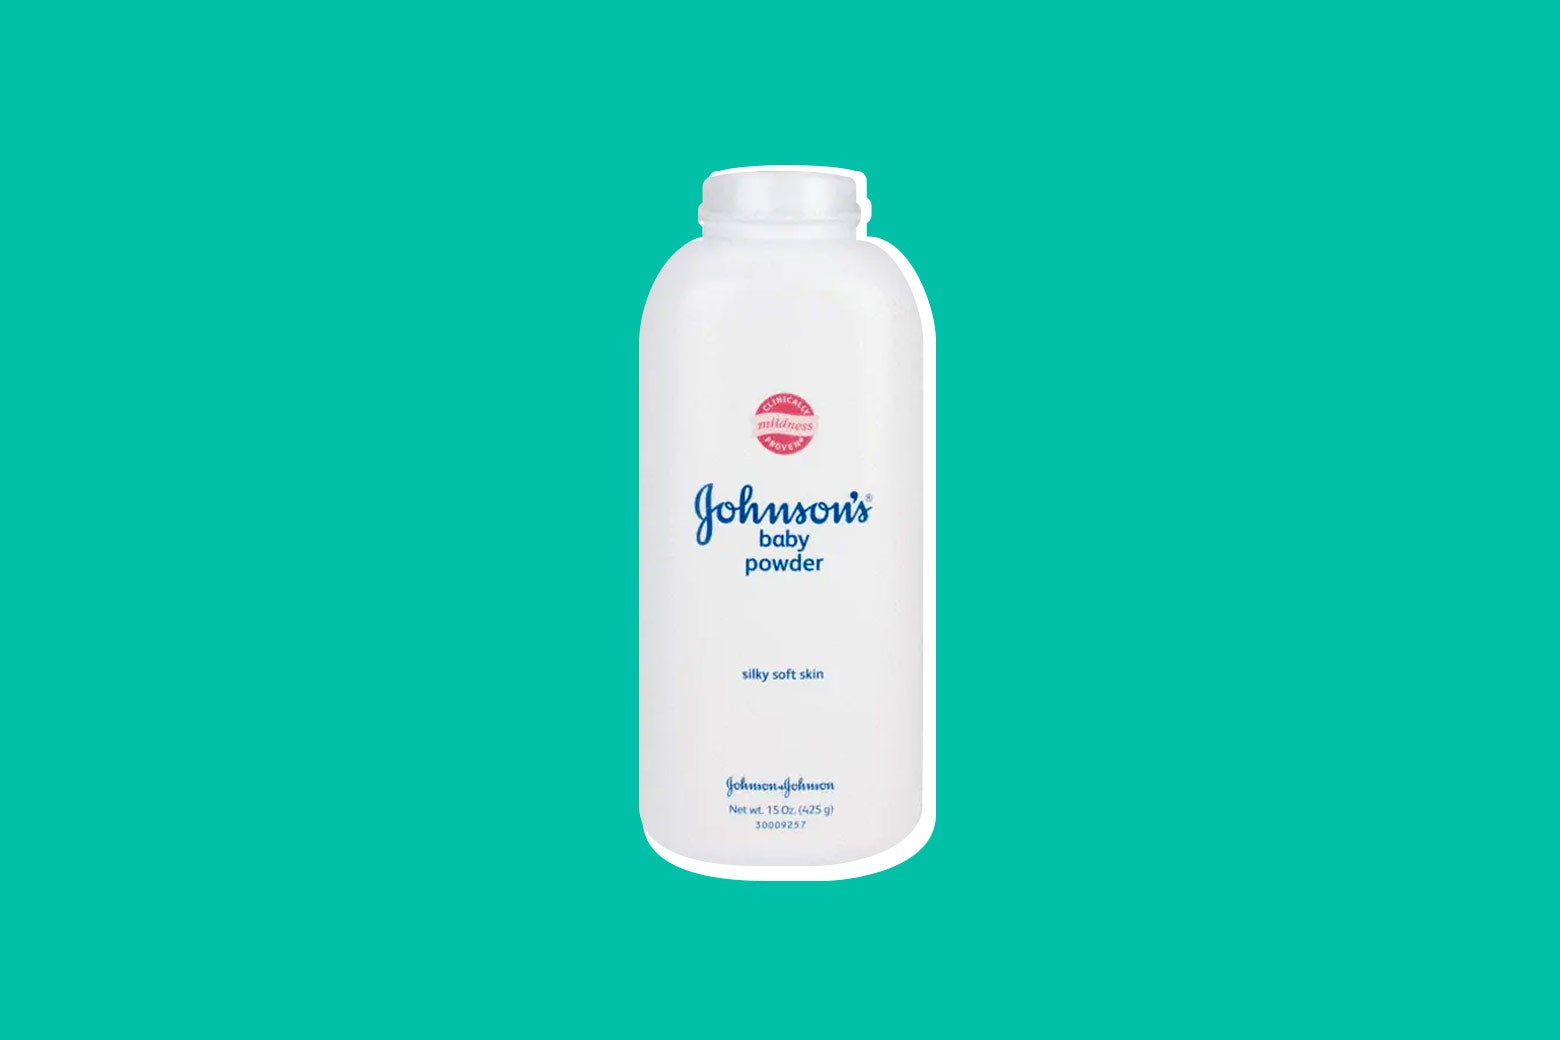 It's a bottle of Johnson & Johnson baby powder